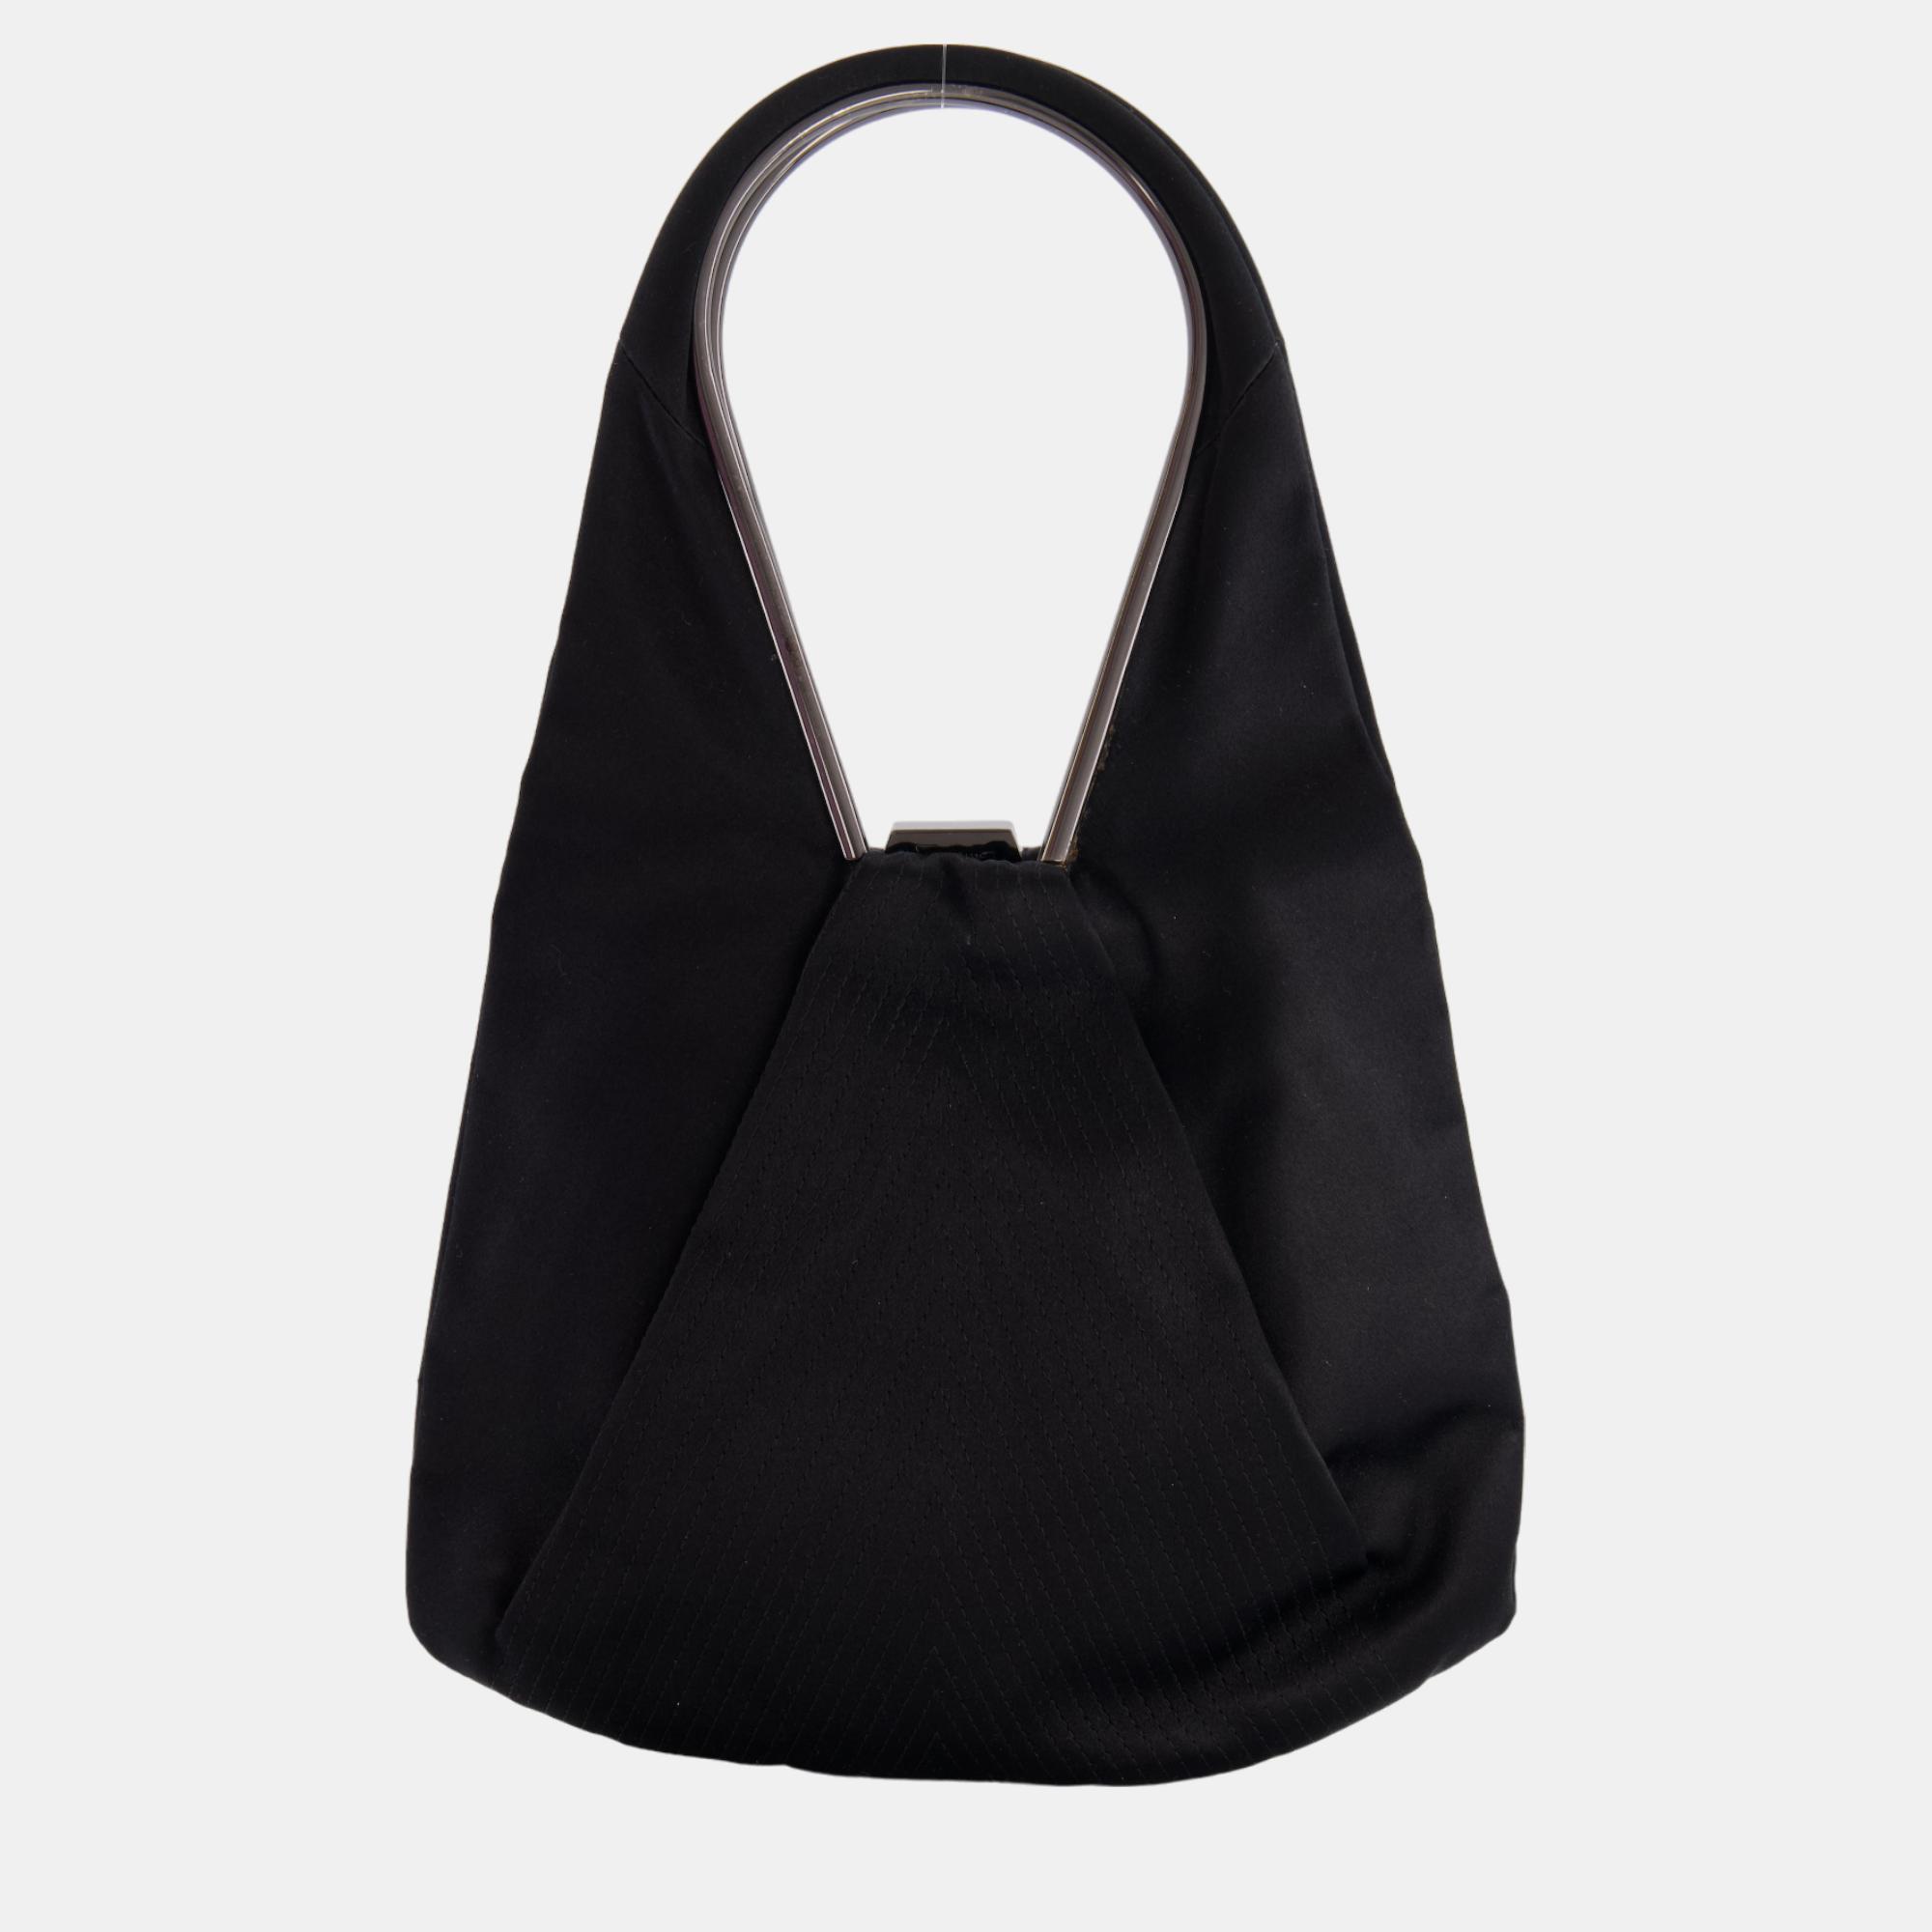 Salvatore Ferragamo Black Satin Top Handle Bag